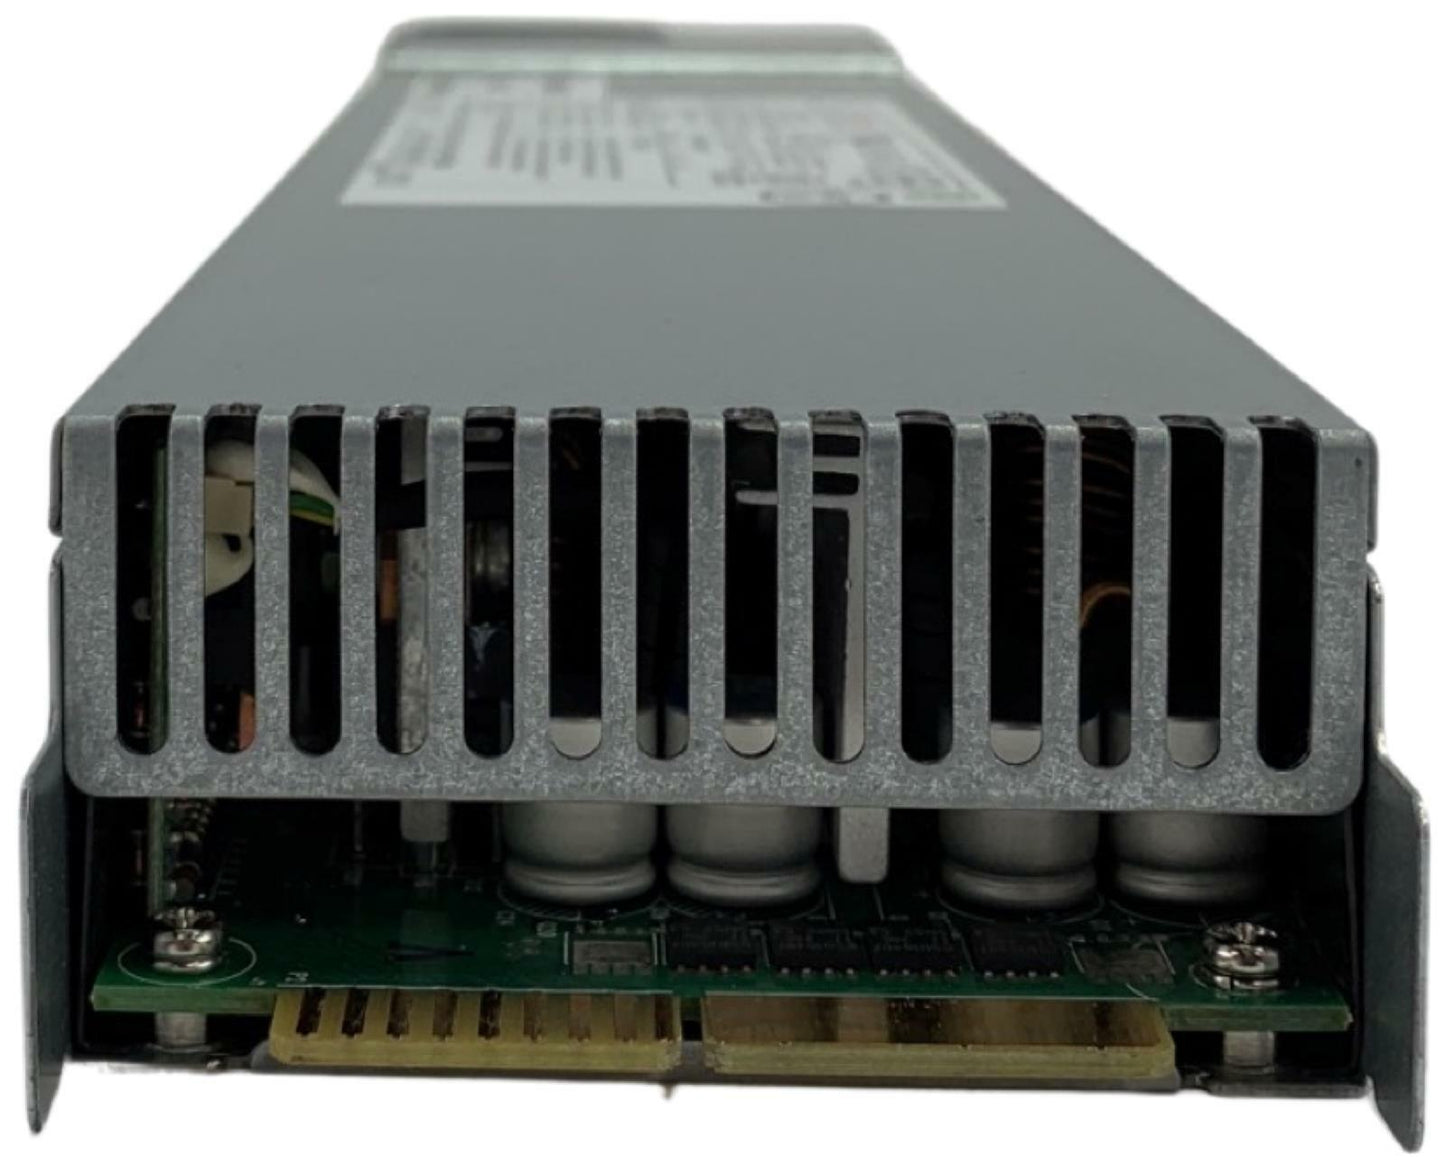 Ablecom PWS-702A-1R 700W Redundant Switching Server Power Supply Unit PSU